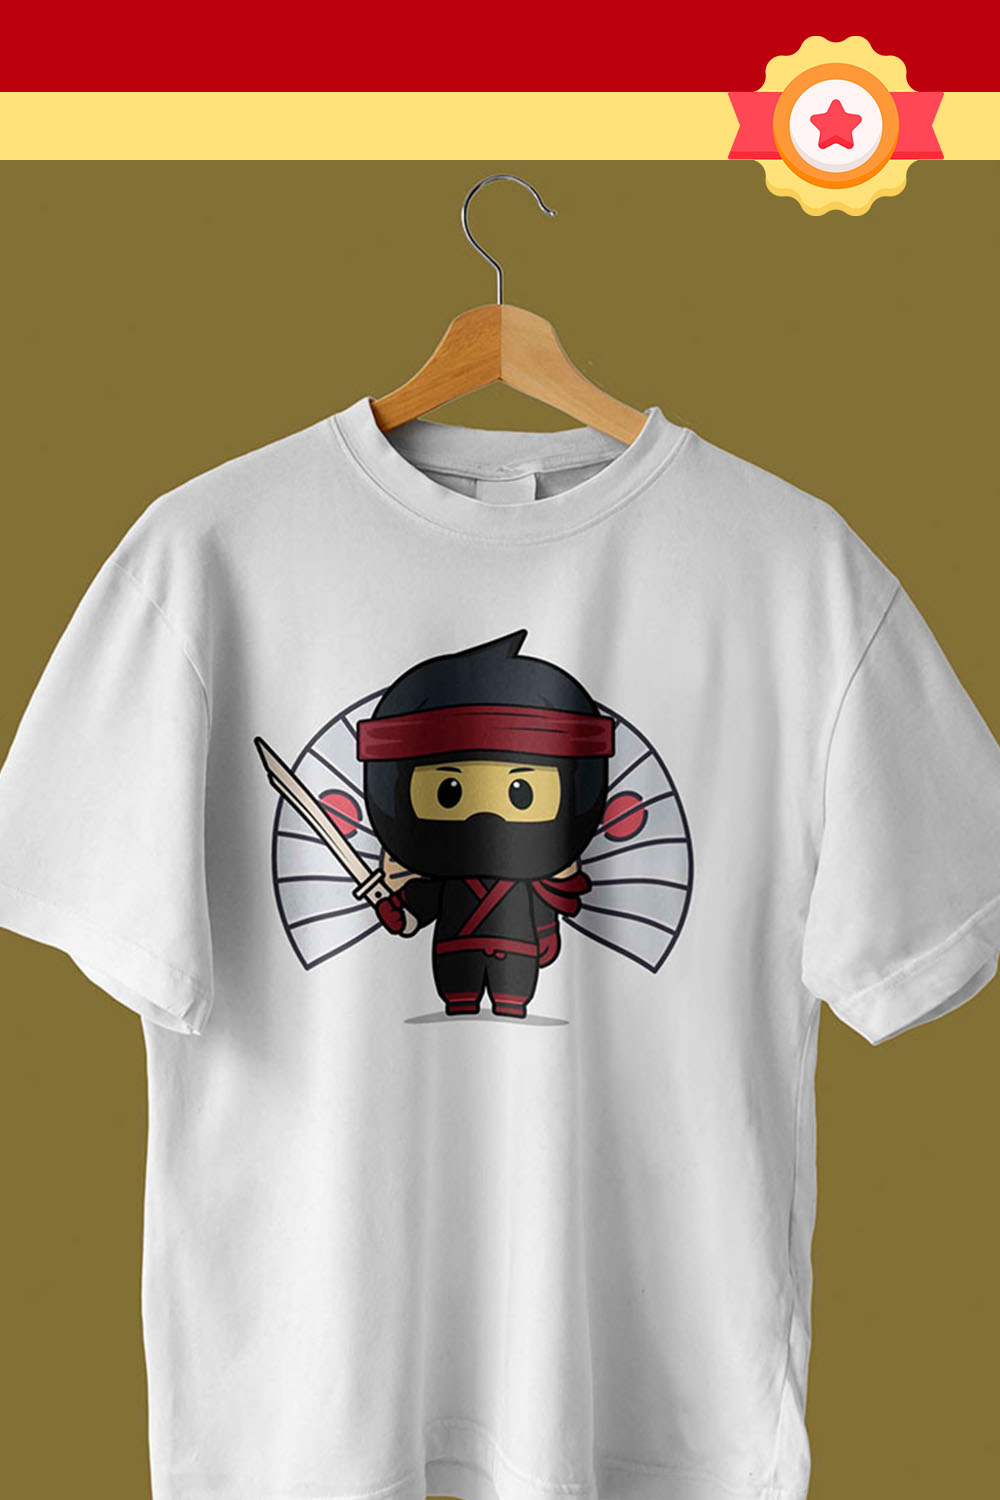 Ninja Illustration T-Shirt Design Pinterest image.